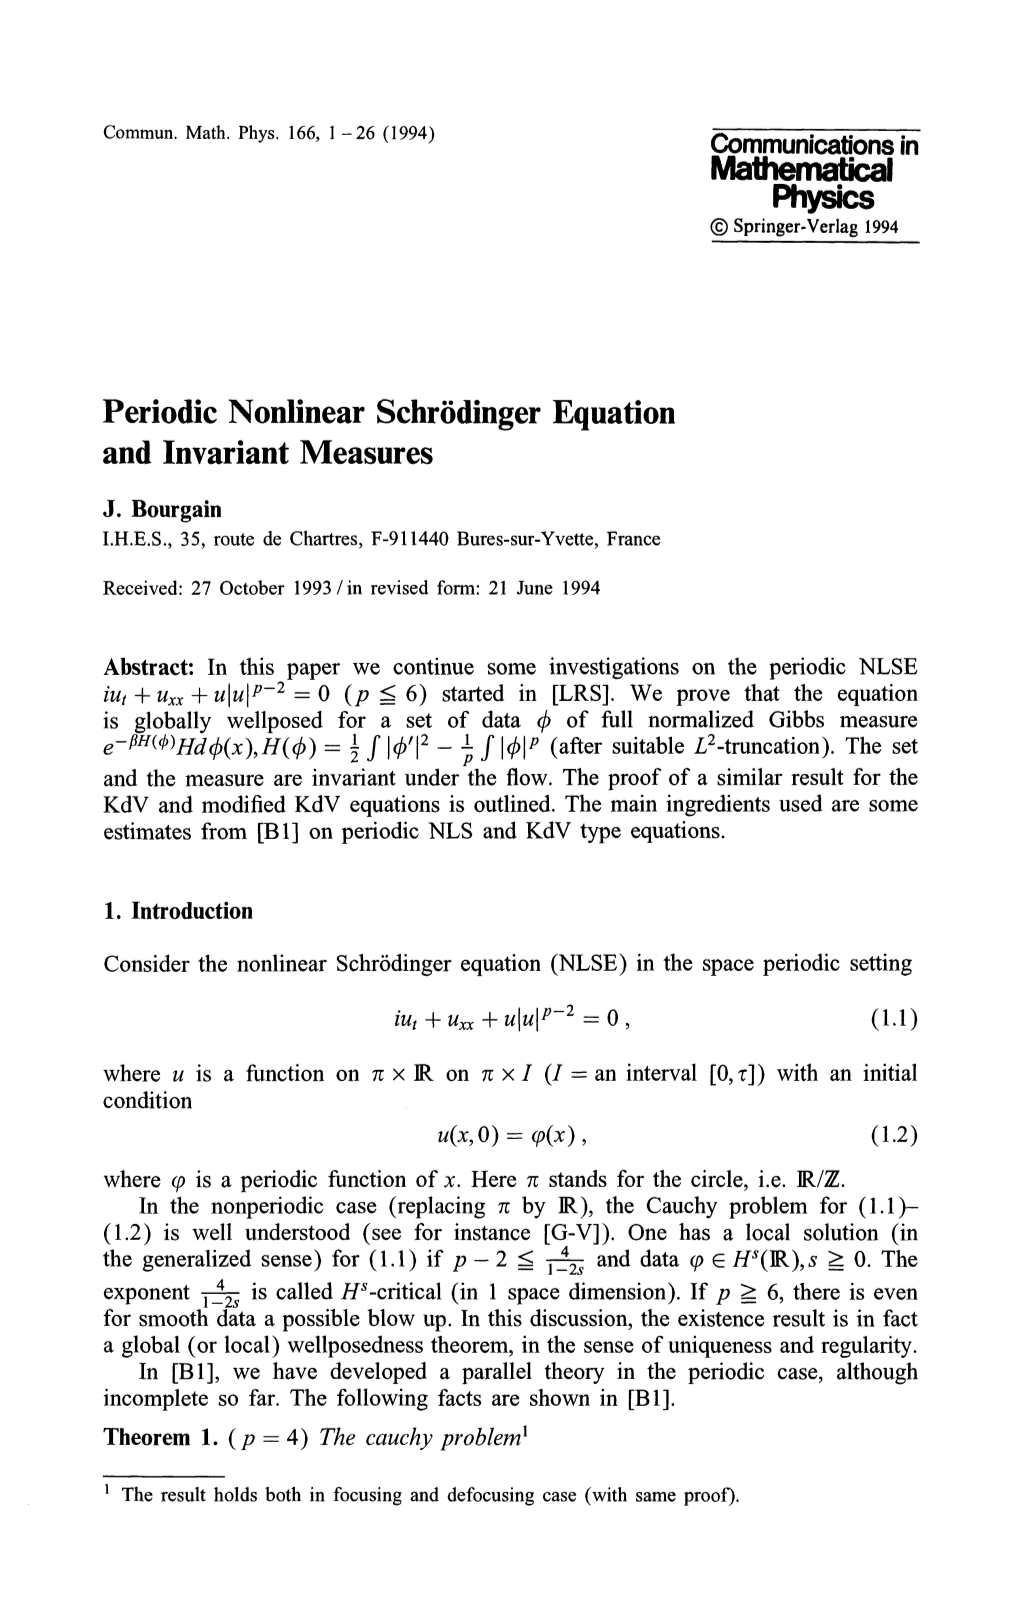 Mathematical Physics © Springer-Verlag 1994